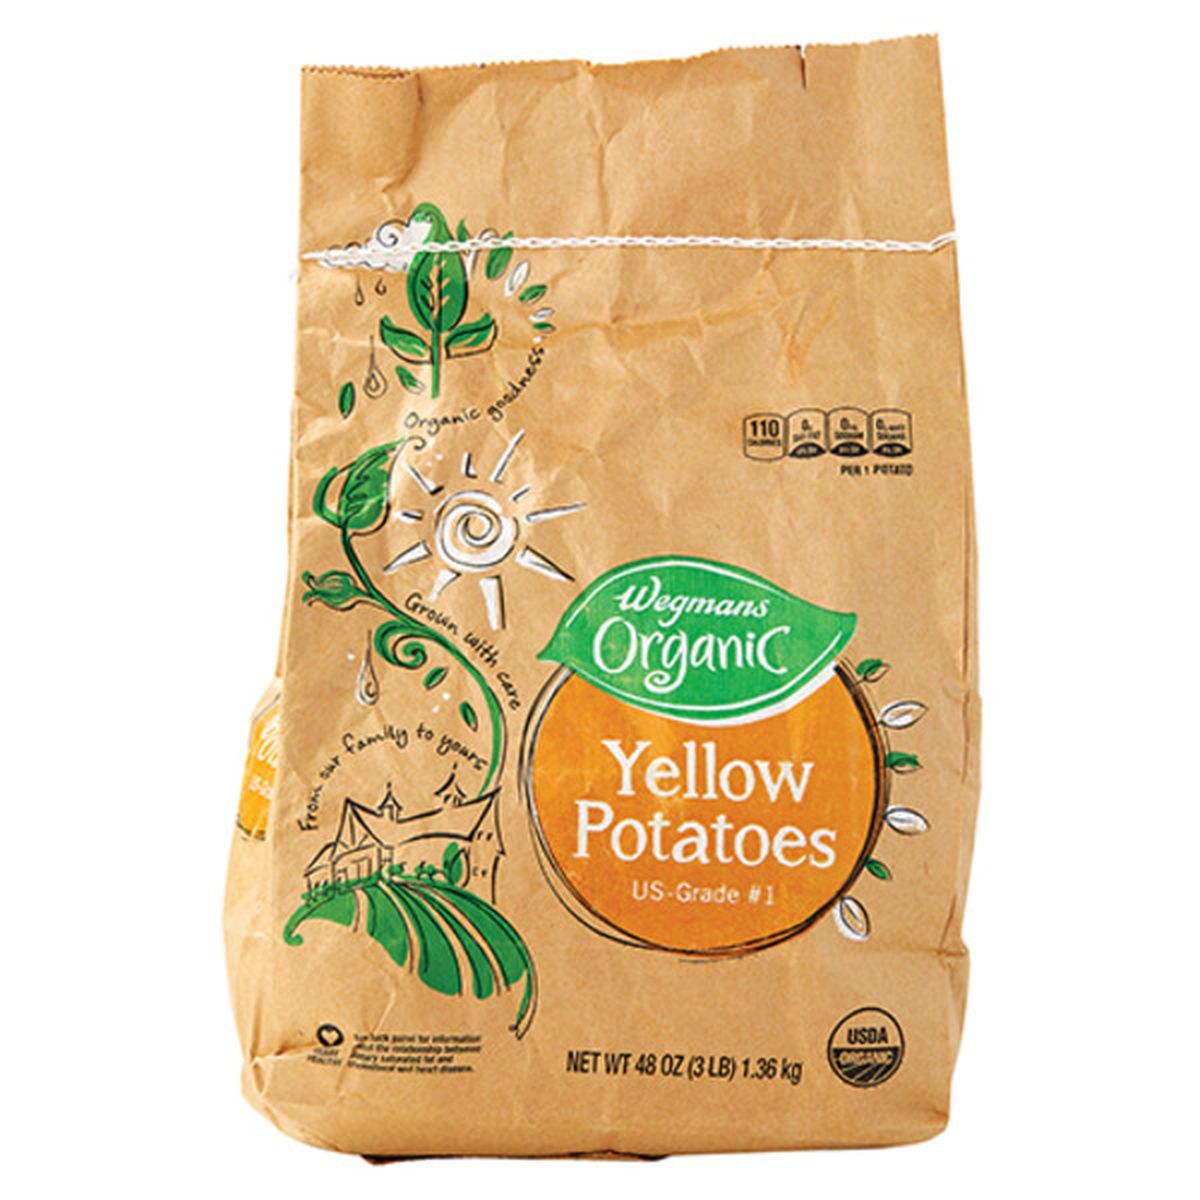 Calories in Organic Yellow Potatoes